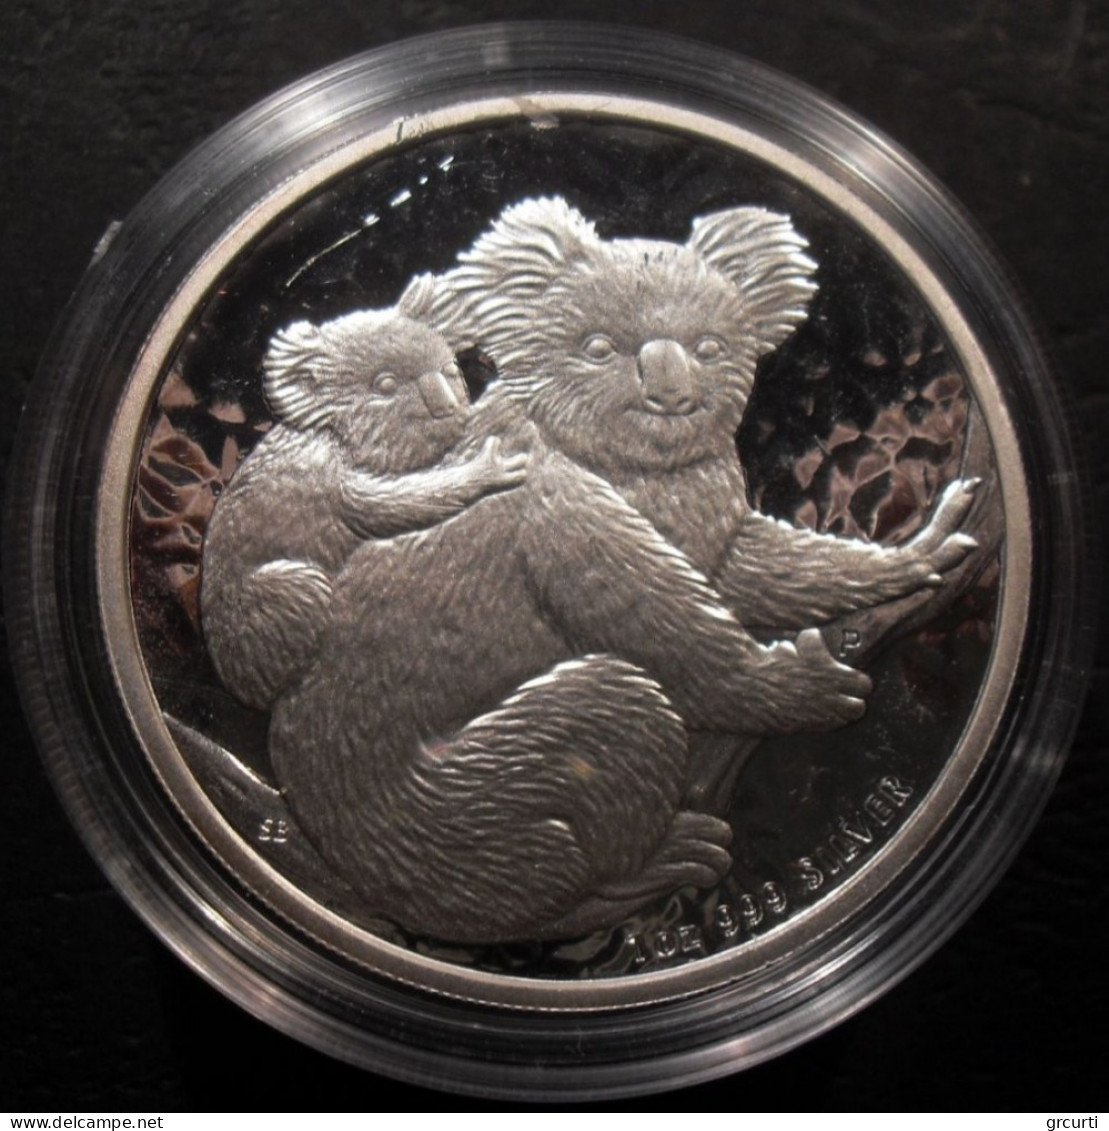 Australia - 1 Dollar 2008 - Koala - UC# 348 - Silver Bullions